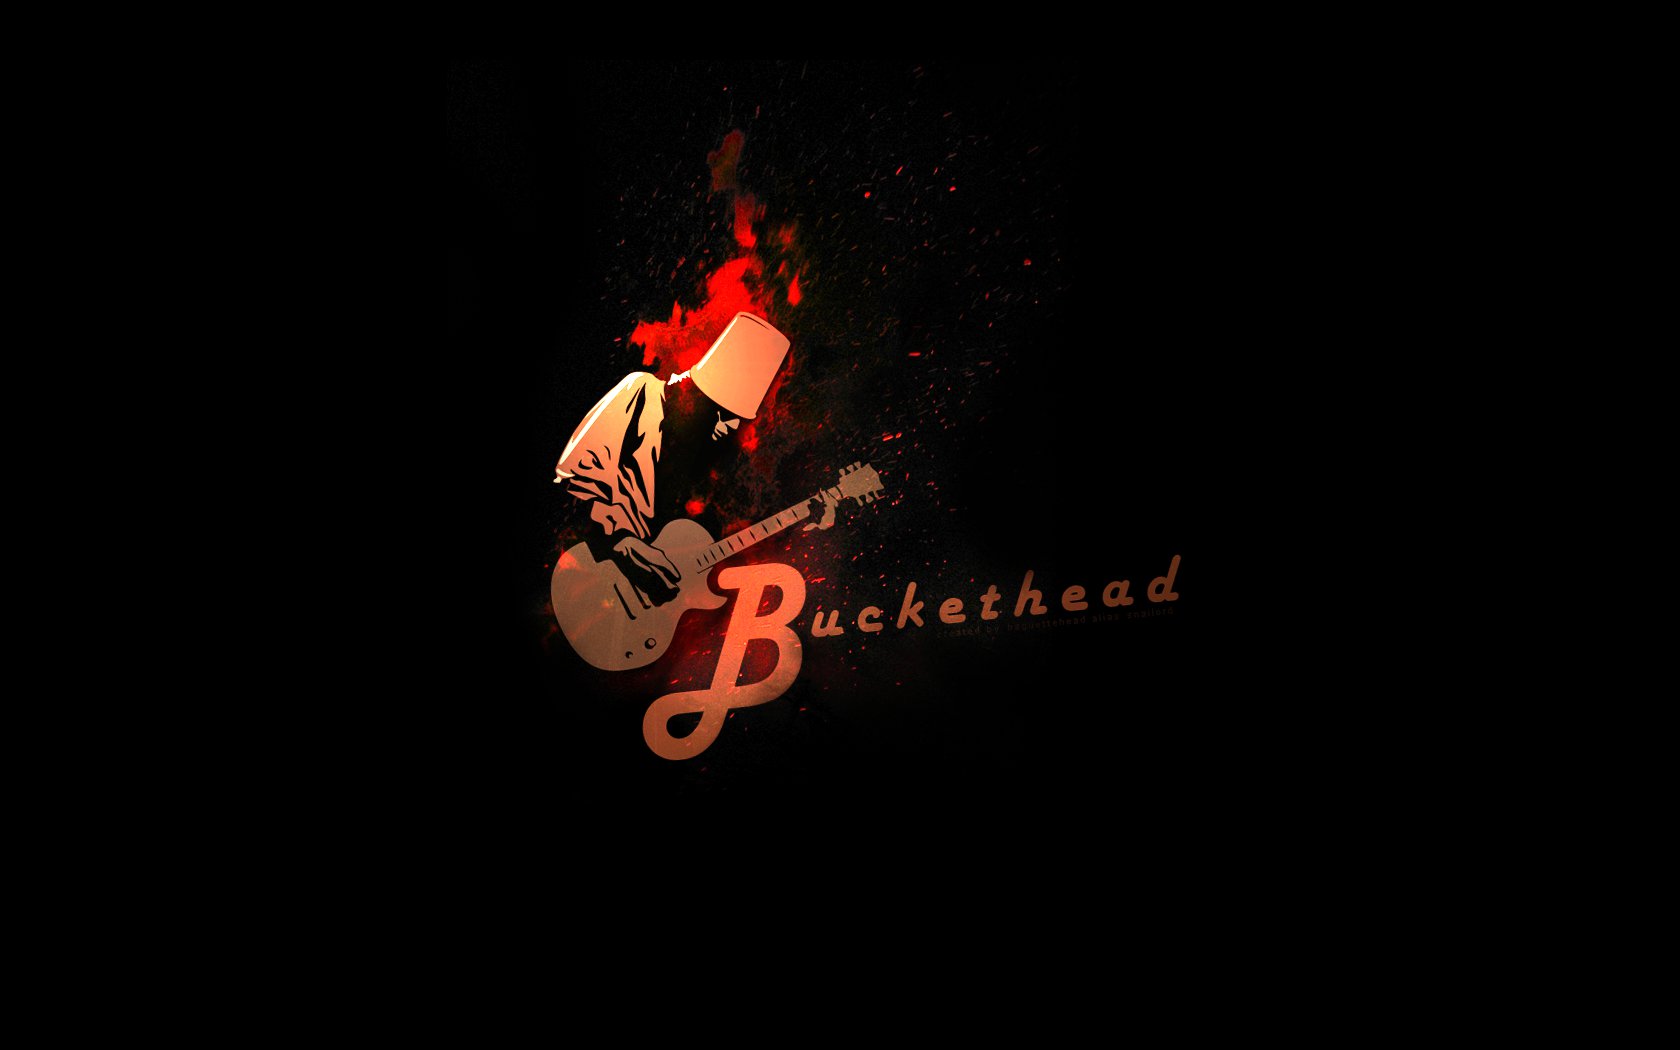 Buckethead On Fire By Snailord